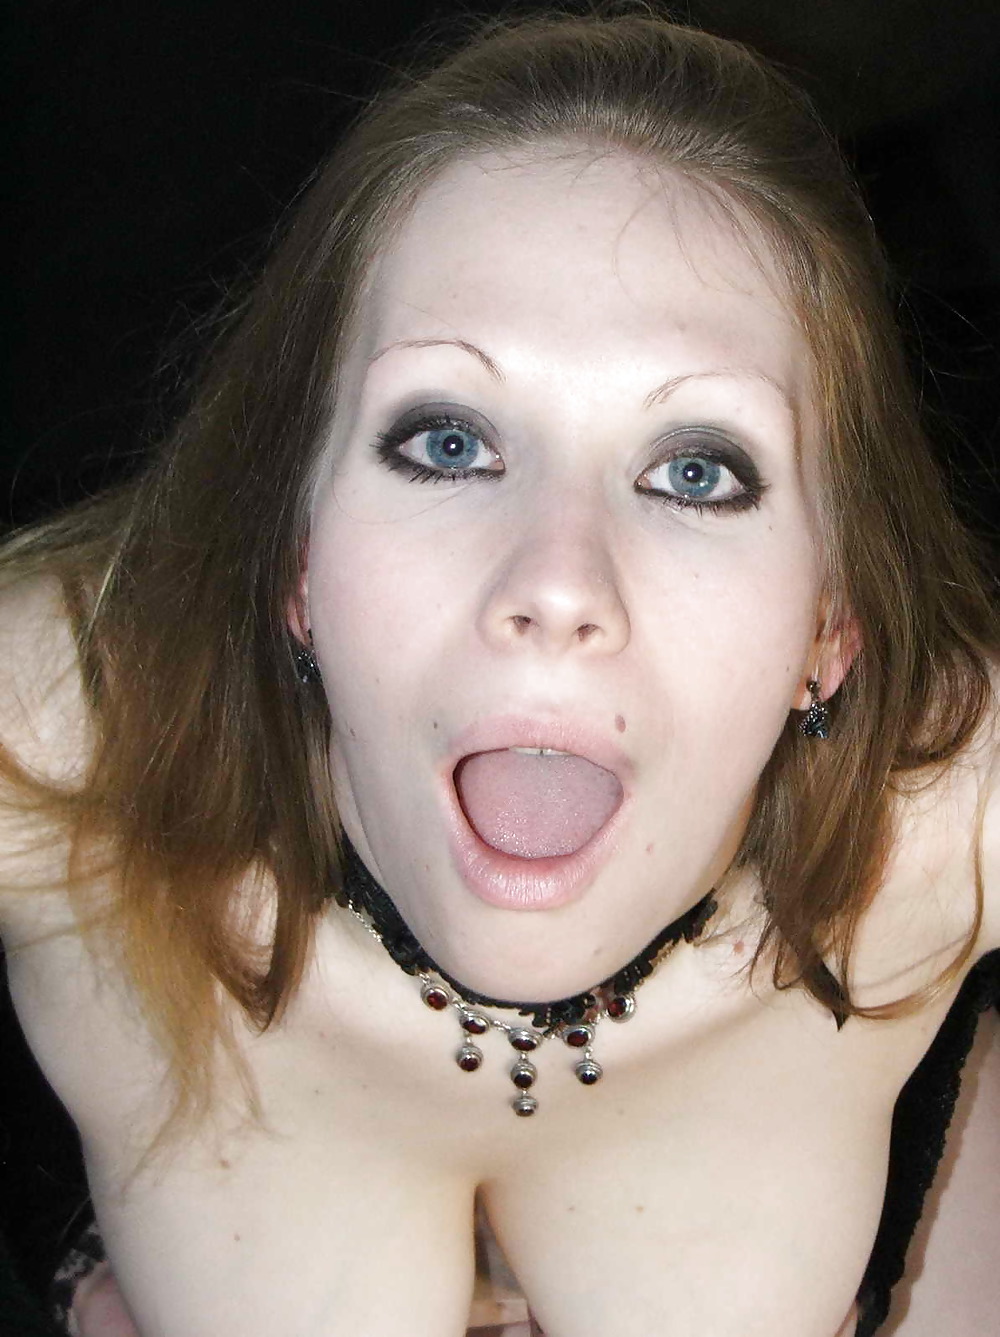 Sex Goth teen facial image